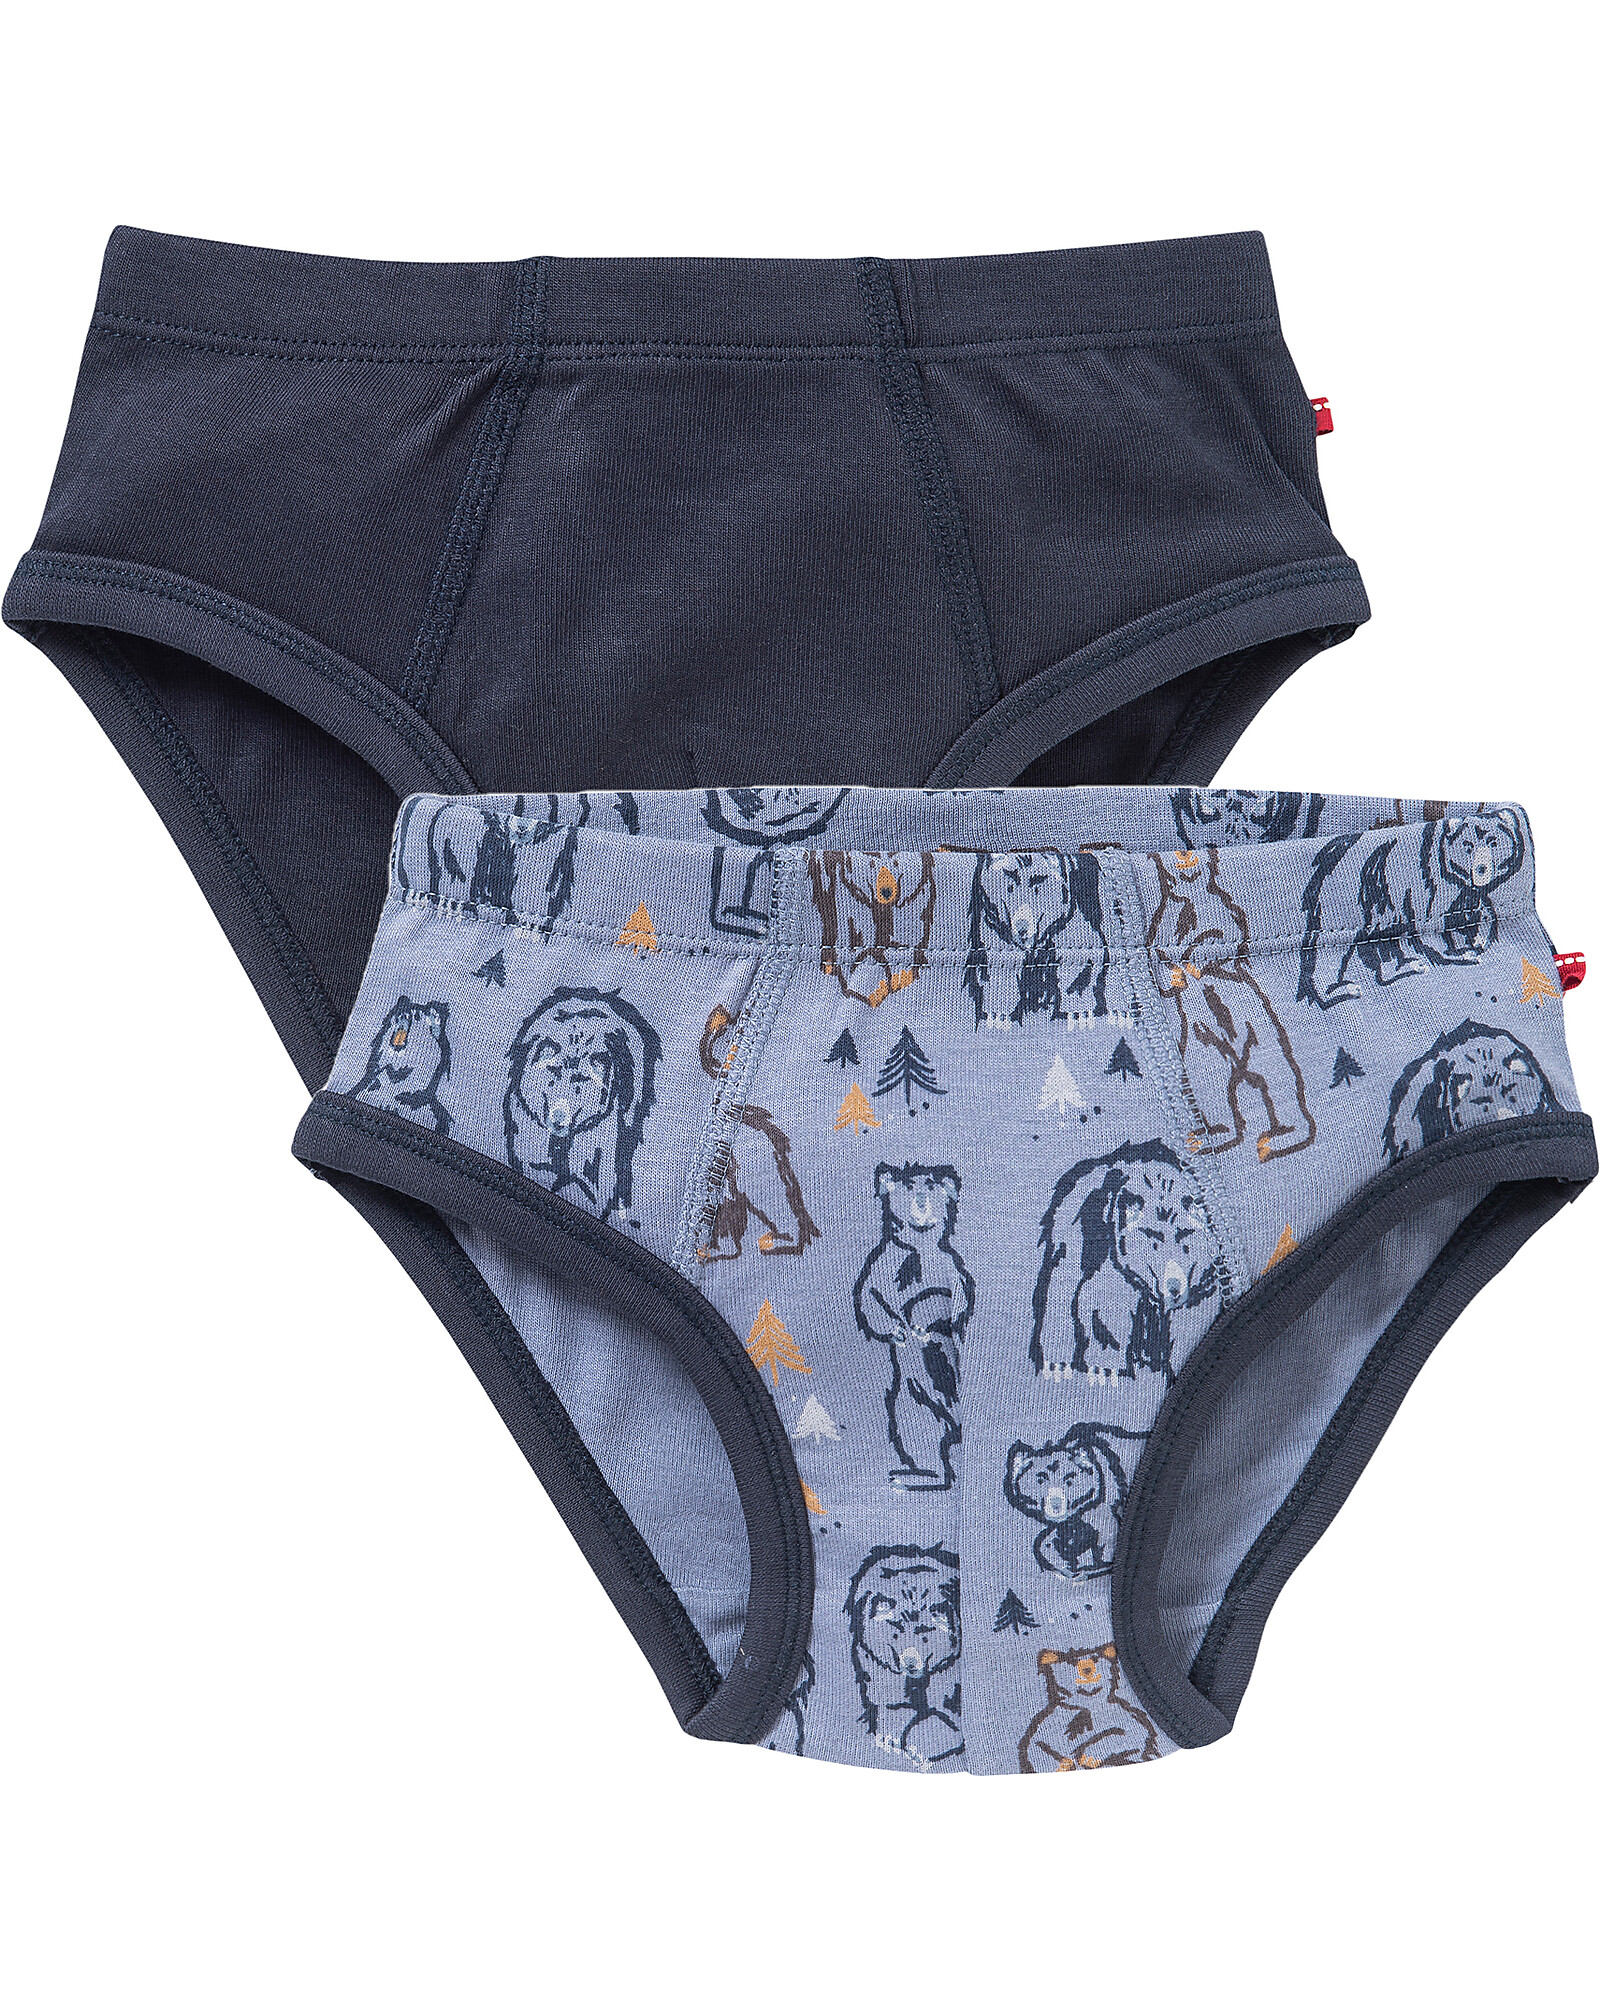 Set of boys' 2-pack panties Paw Patrol boxer shorts - Underwear